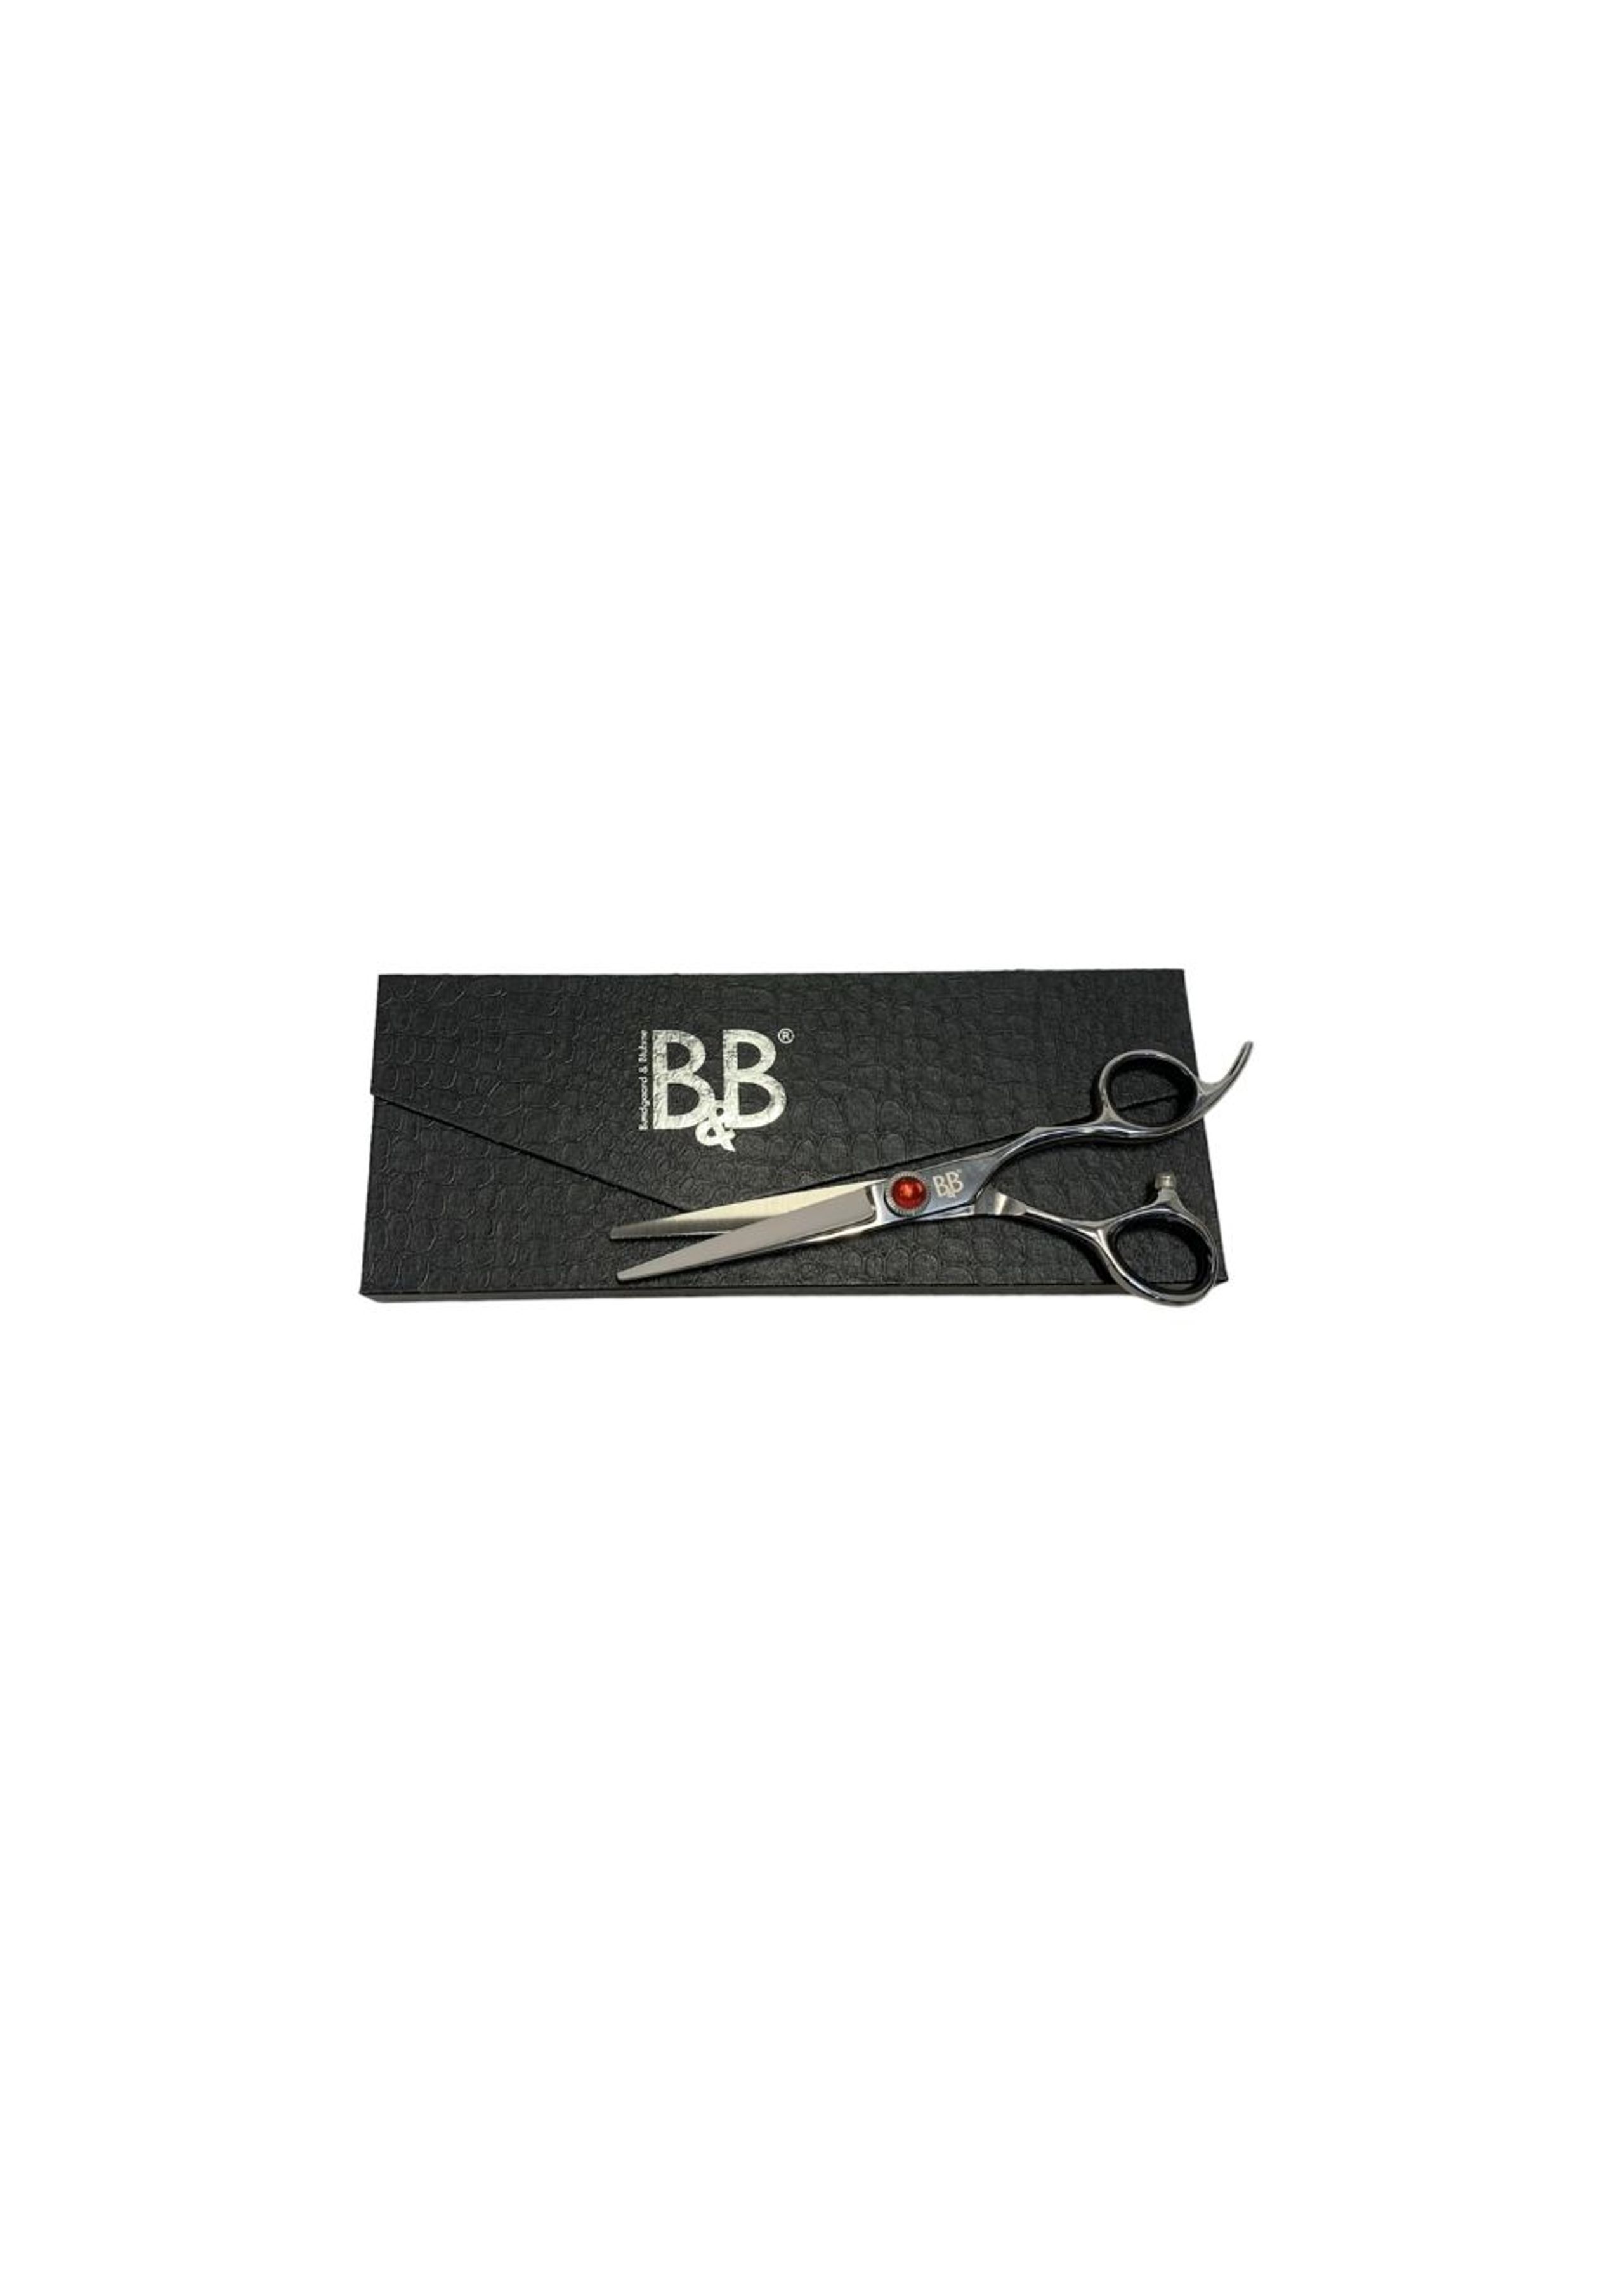 B&B - Hundebürste - Professional Grooming Scissor 6